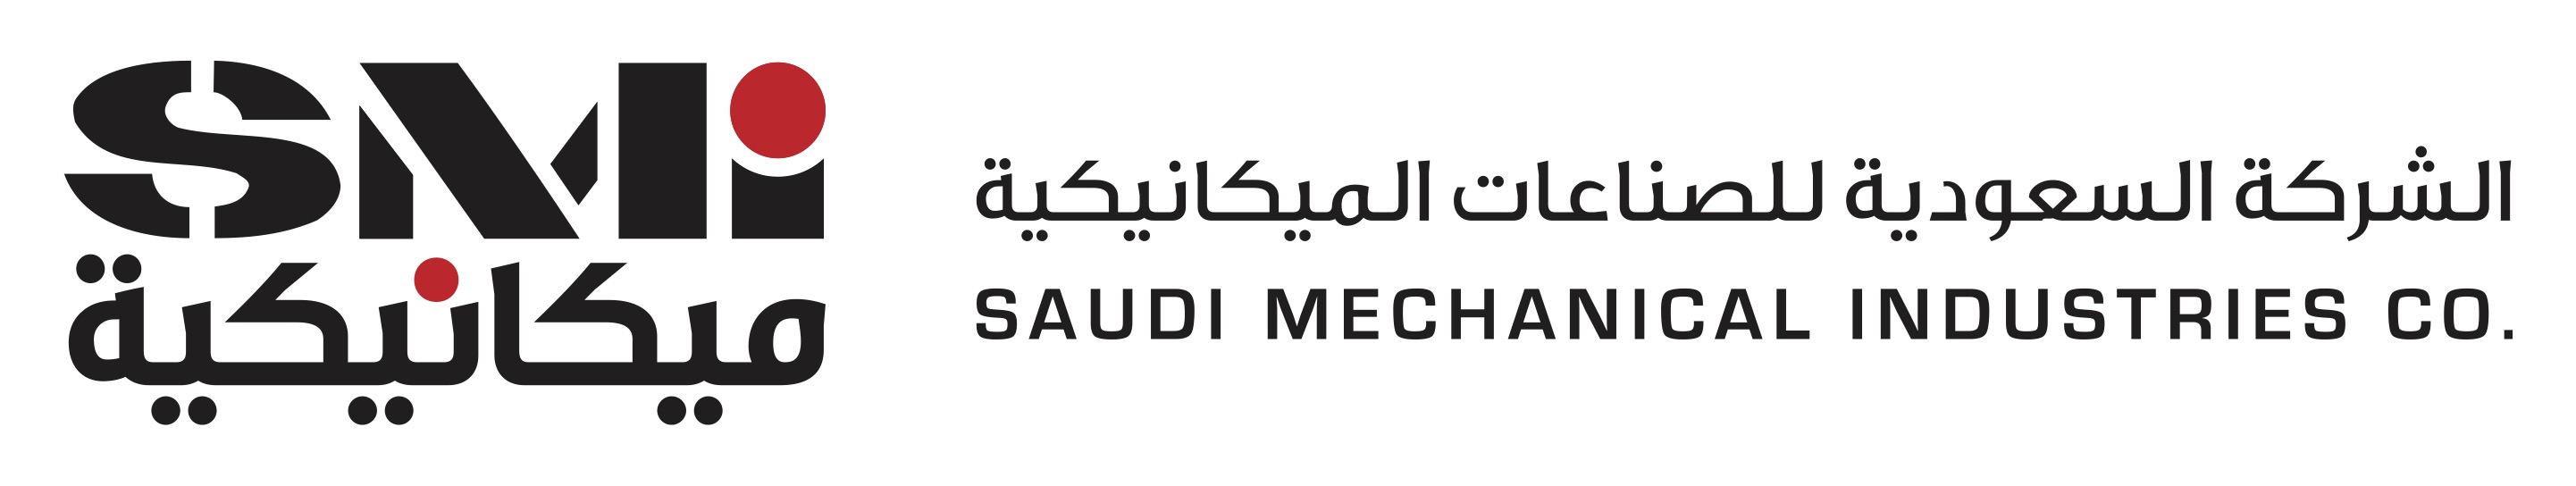 SMI-logo